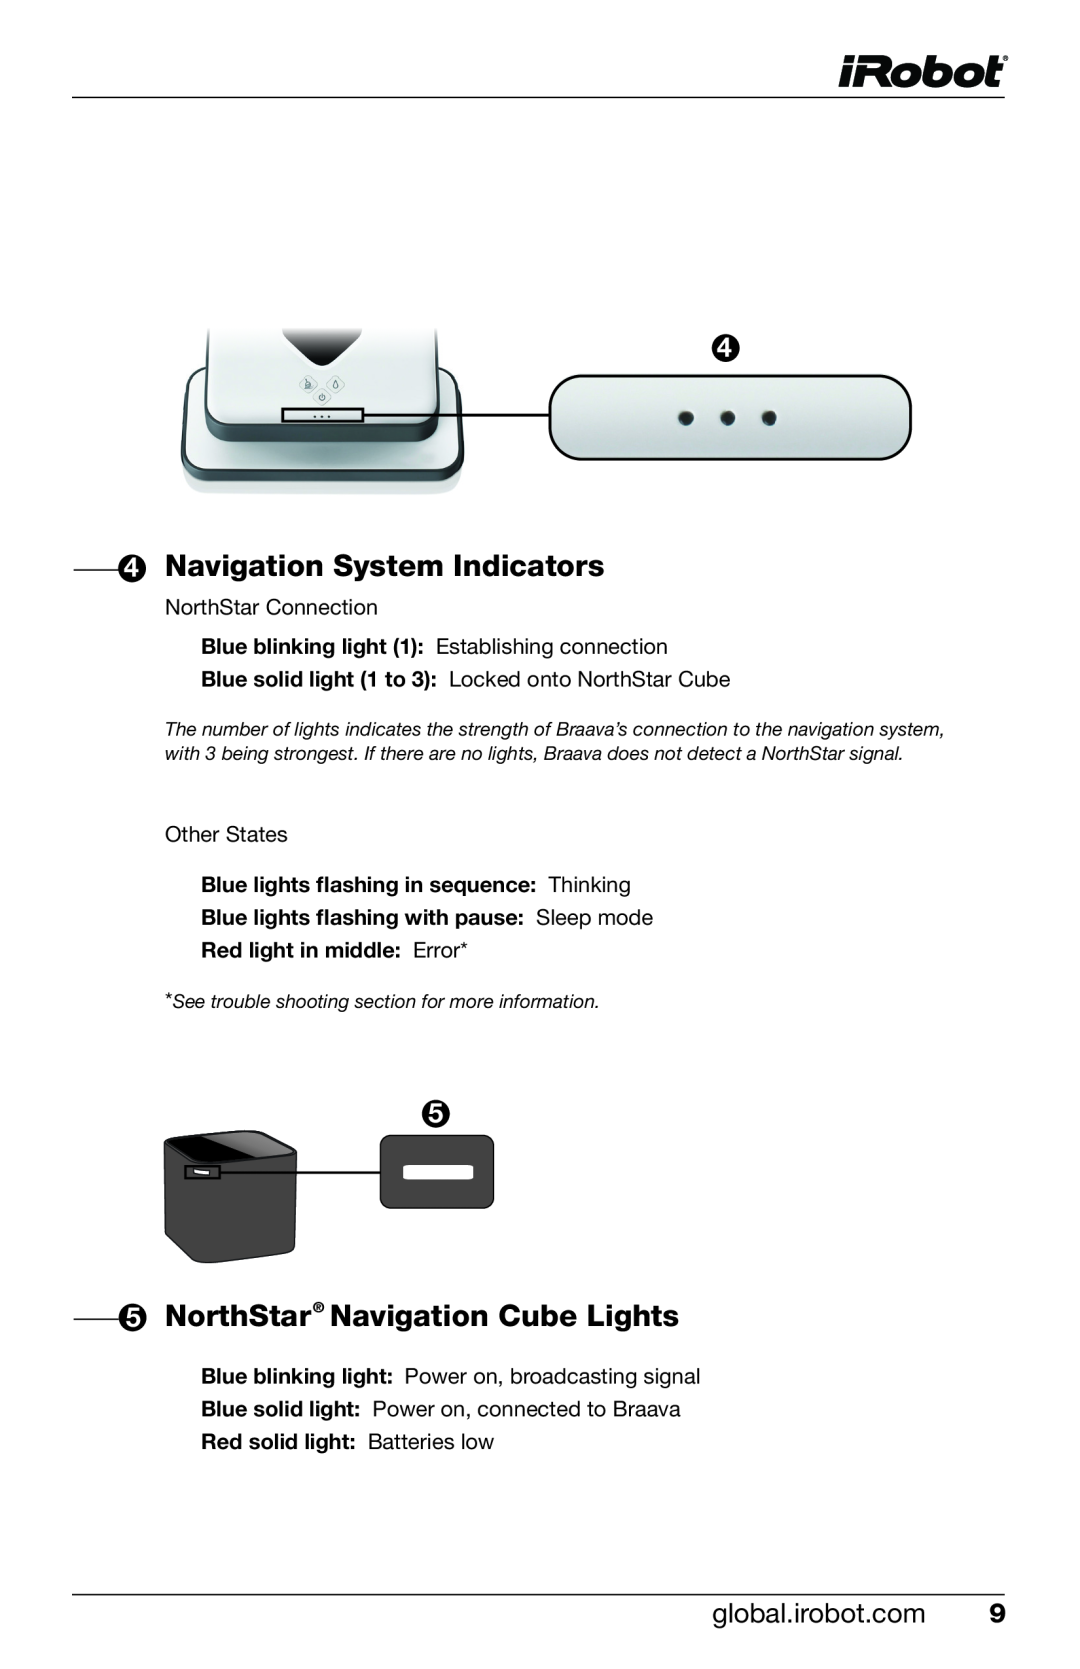 iRobot 380t 4Navigation System Indicators, 5NorthStar Navigation Cube Lights, Blue lights flashing in sequence: Thinking 